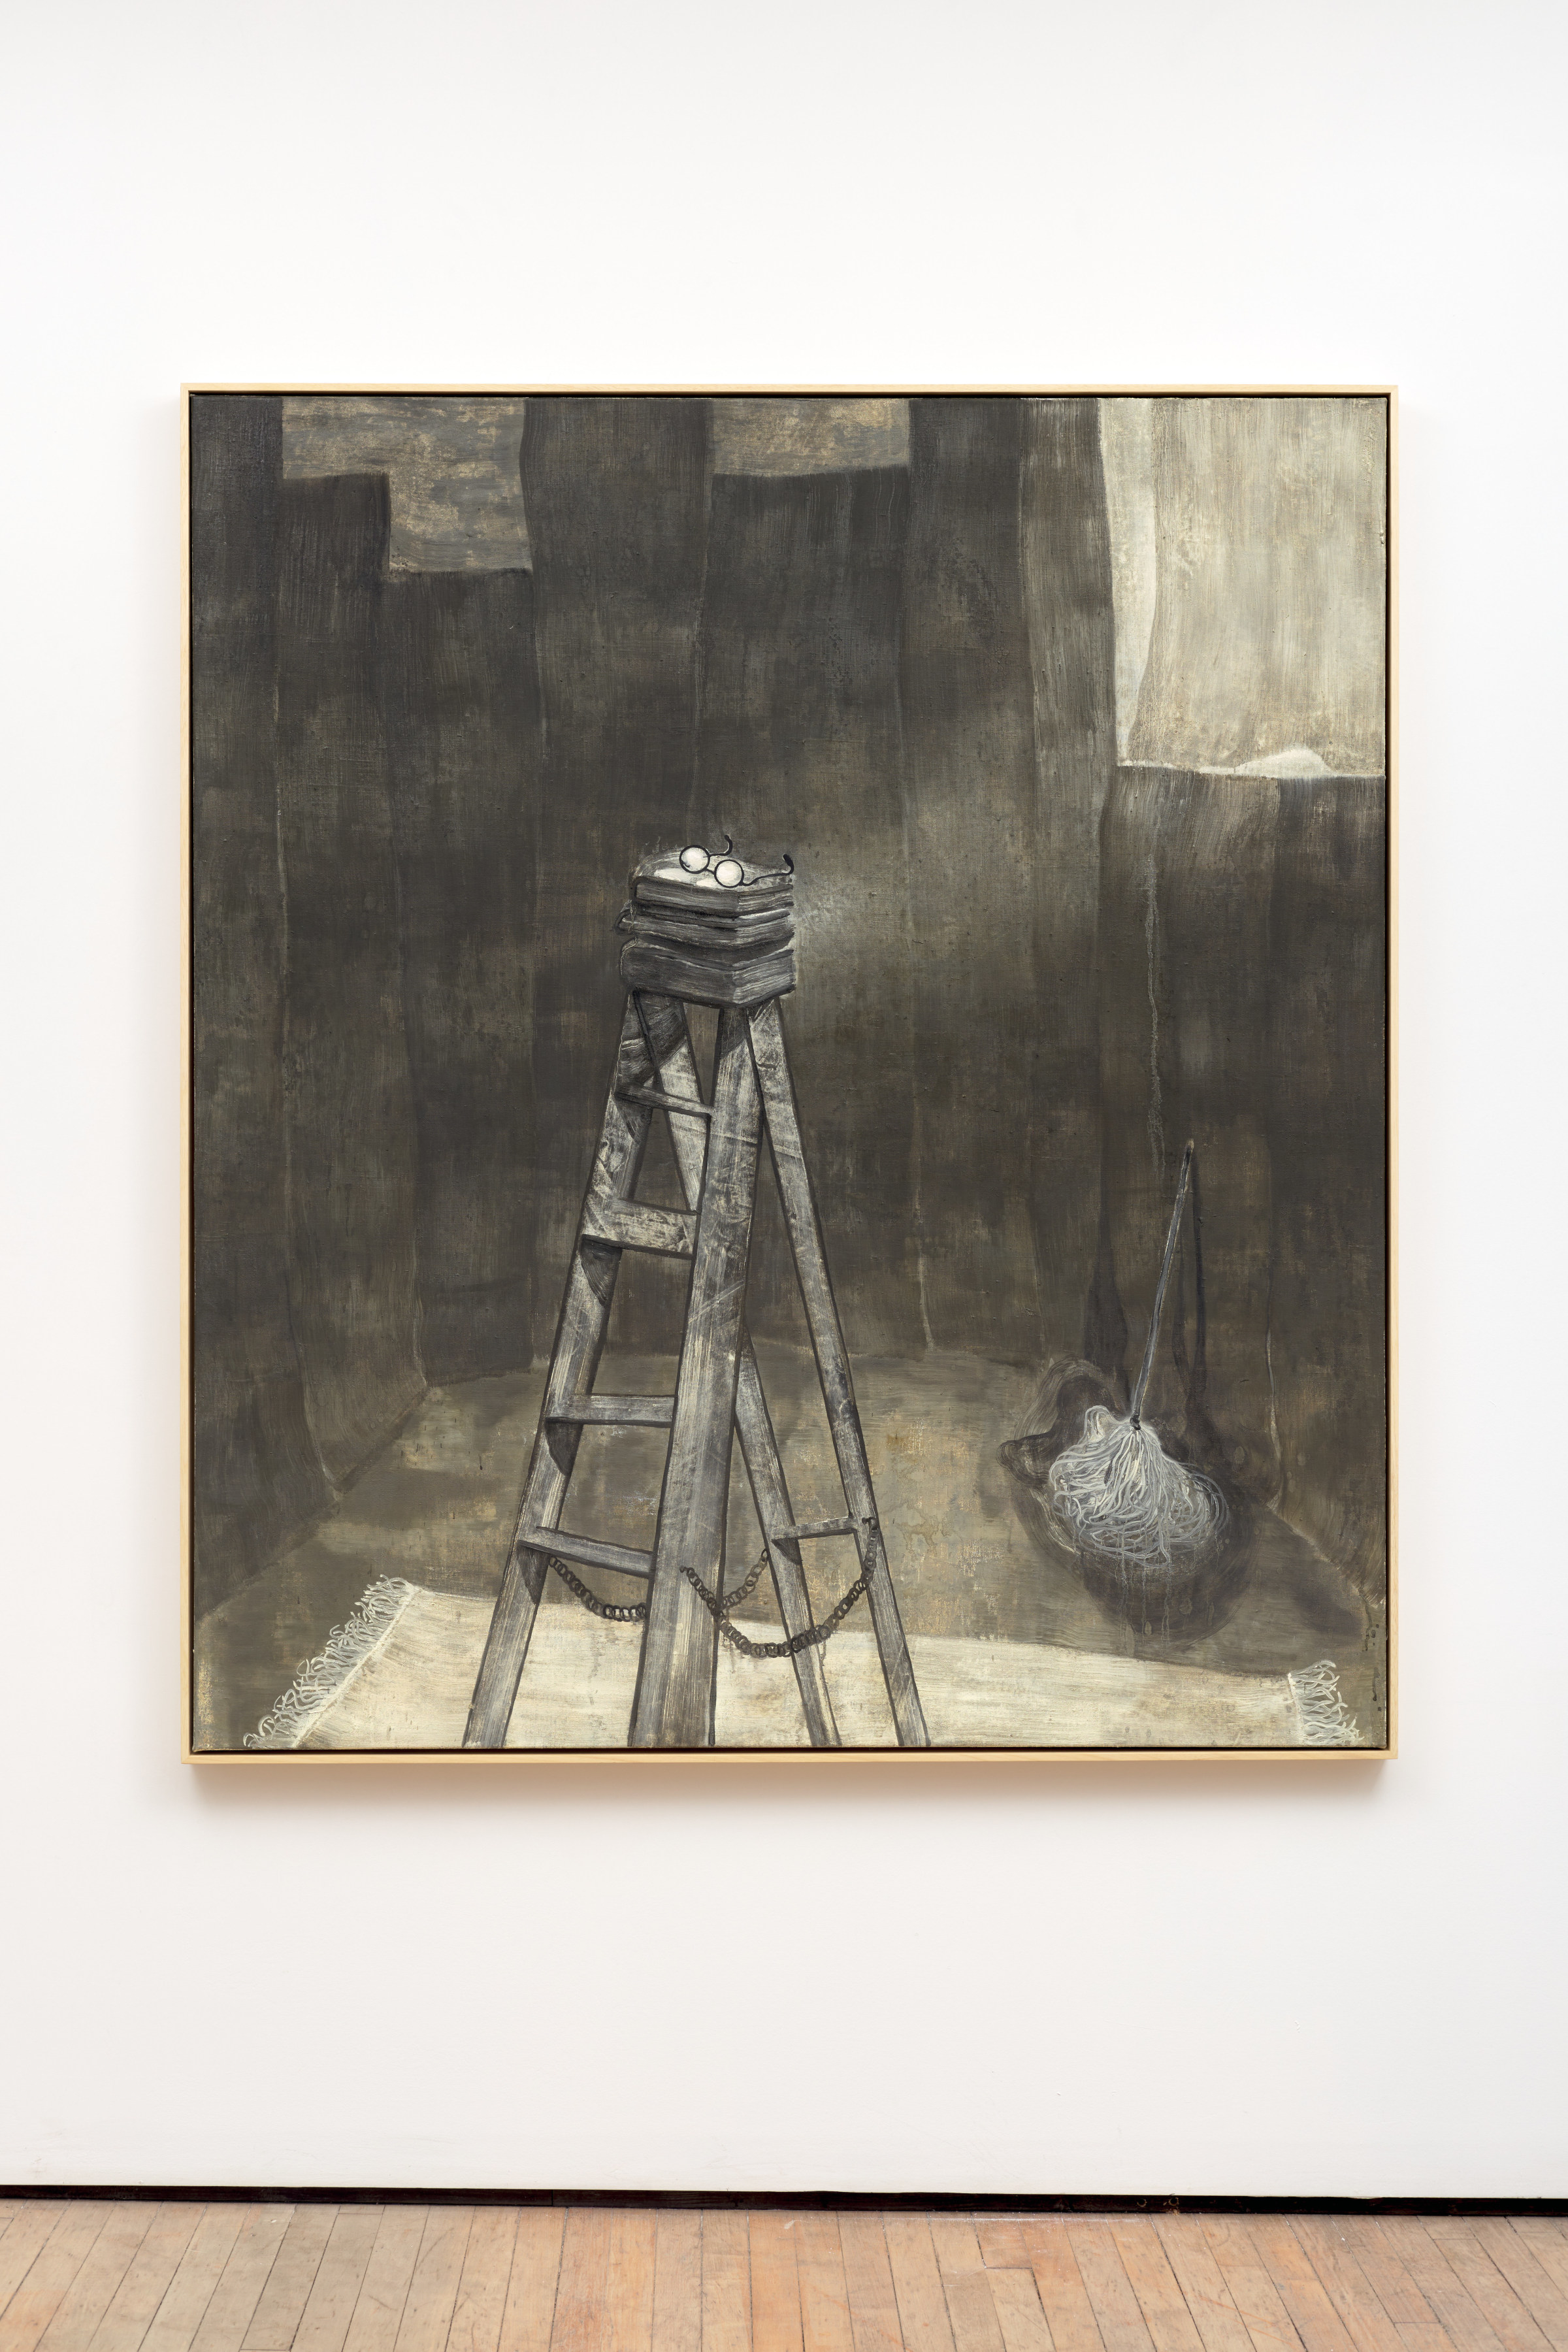 Matthias Franz, der Idiot, 2022, oil on canvas, framed, 173.2 x 153.2 cm, 68 1/4 x 60 1/4 in, photograph by Raul Valverde, courtesy GRIMM, New York.